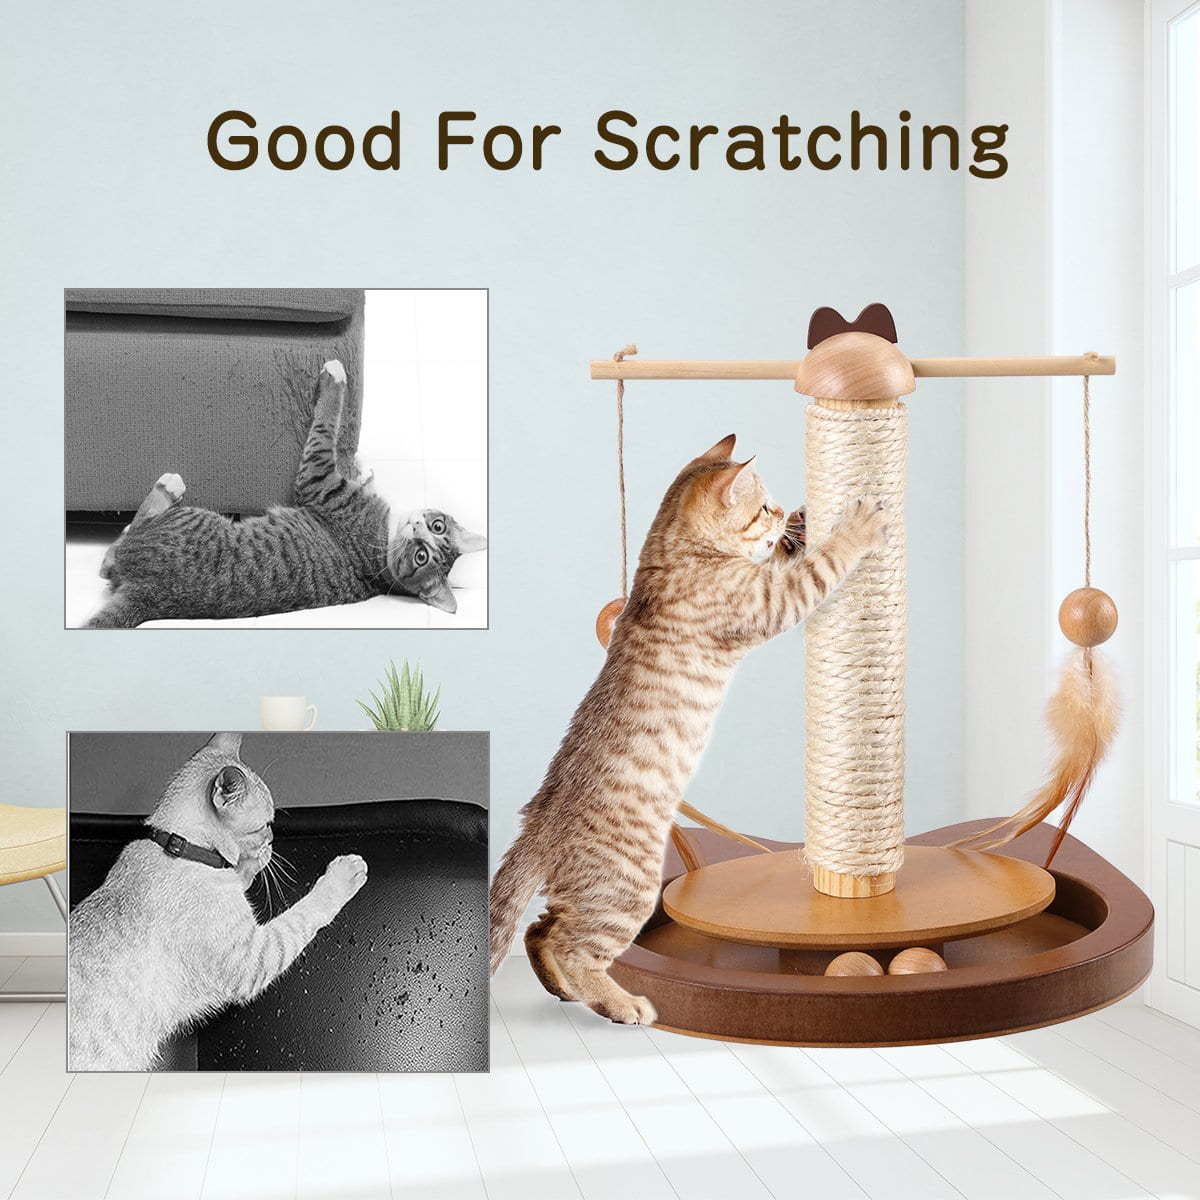 360° Multifunctional Cat Teaser - squishbeans